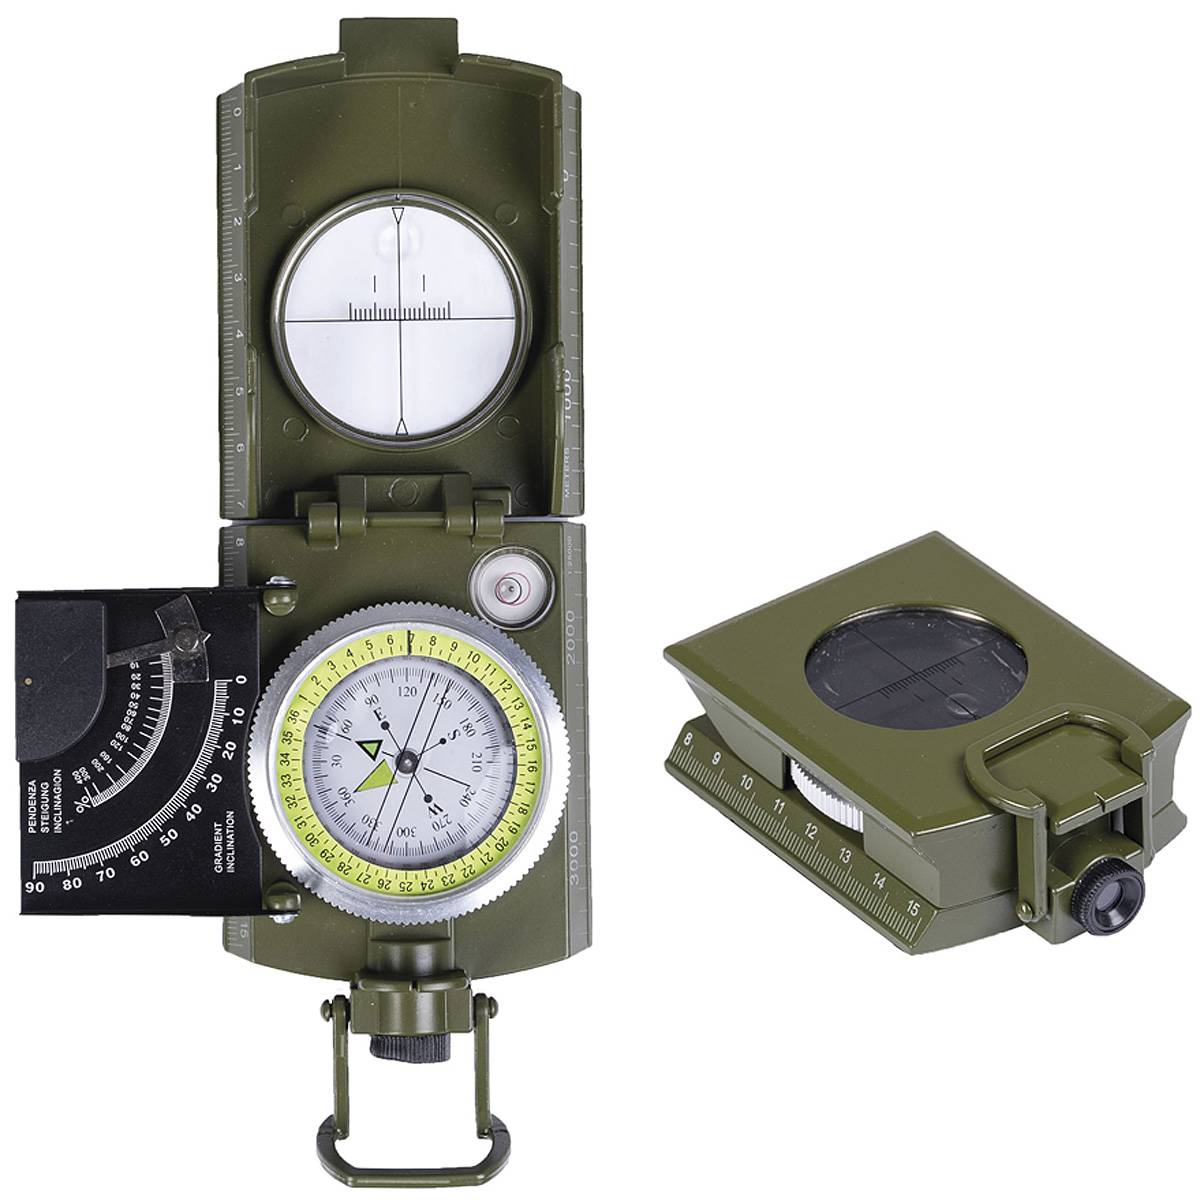 Kompass Marschkompass Metallgehäuse Bundeswehr Armeekompass mit Etui Oliv 